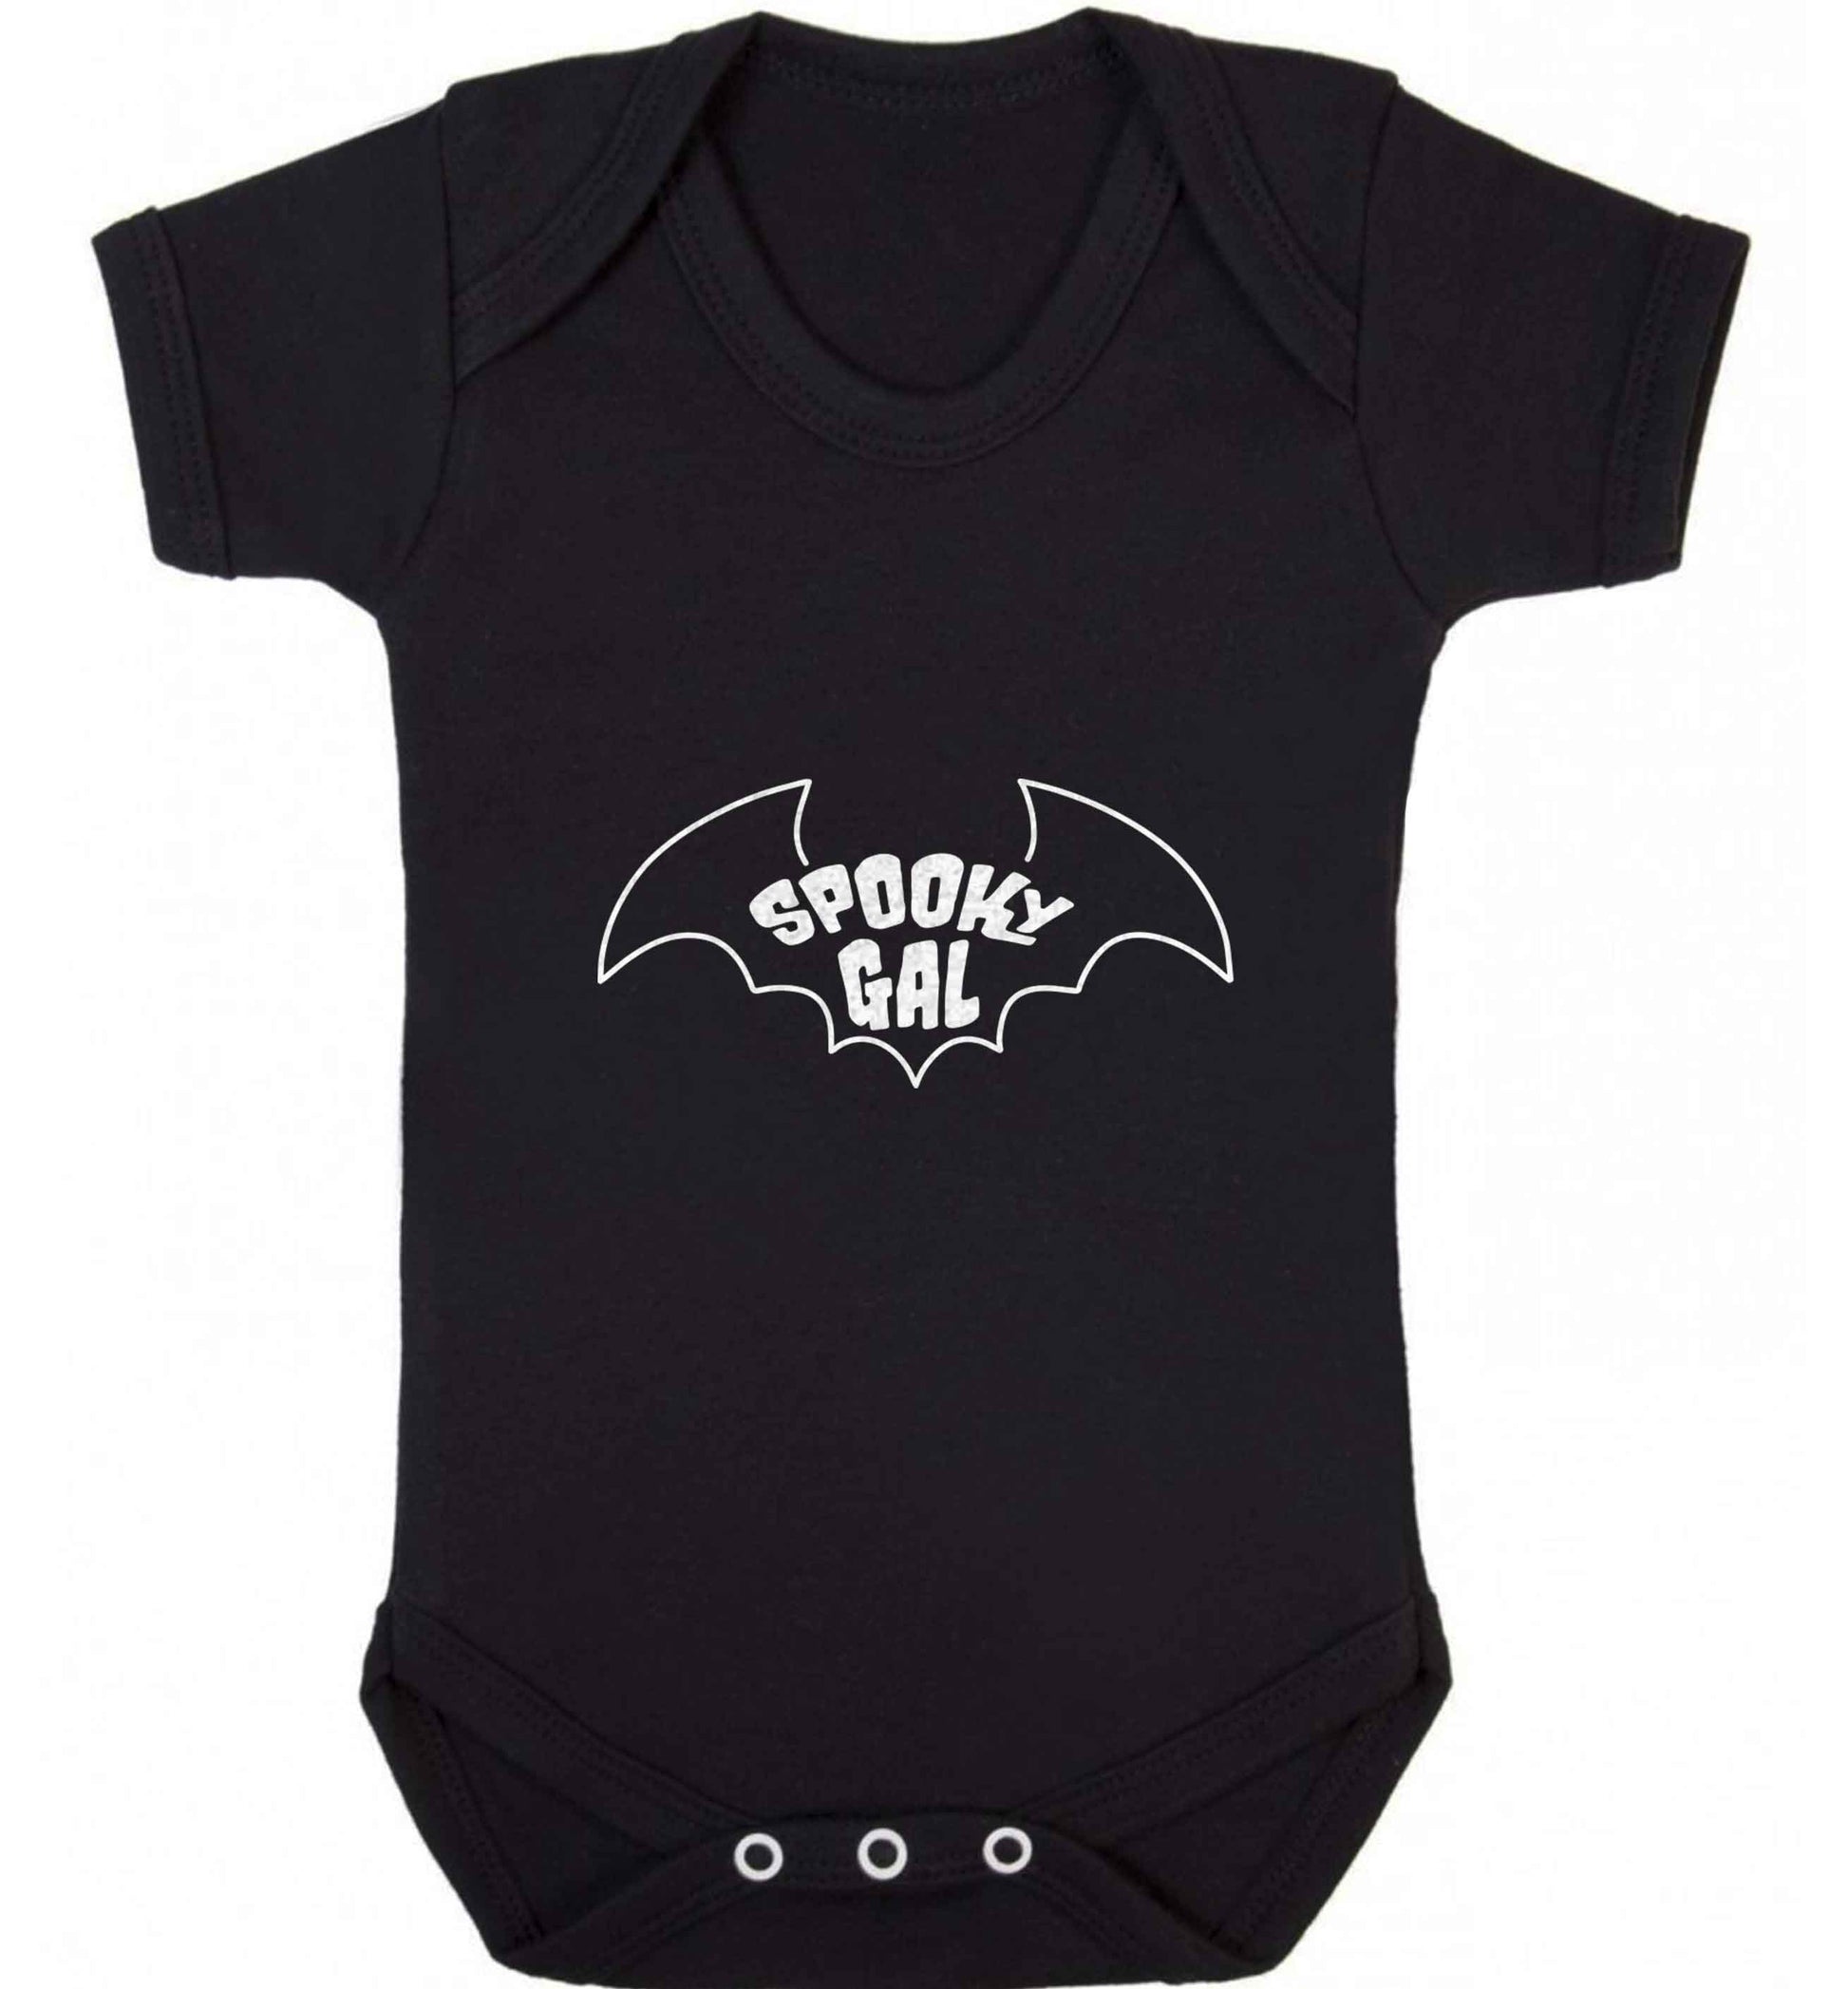 Spooky gal Kit baby vest black 18-24 months